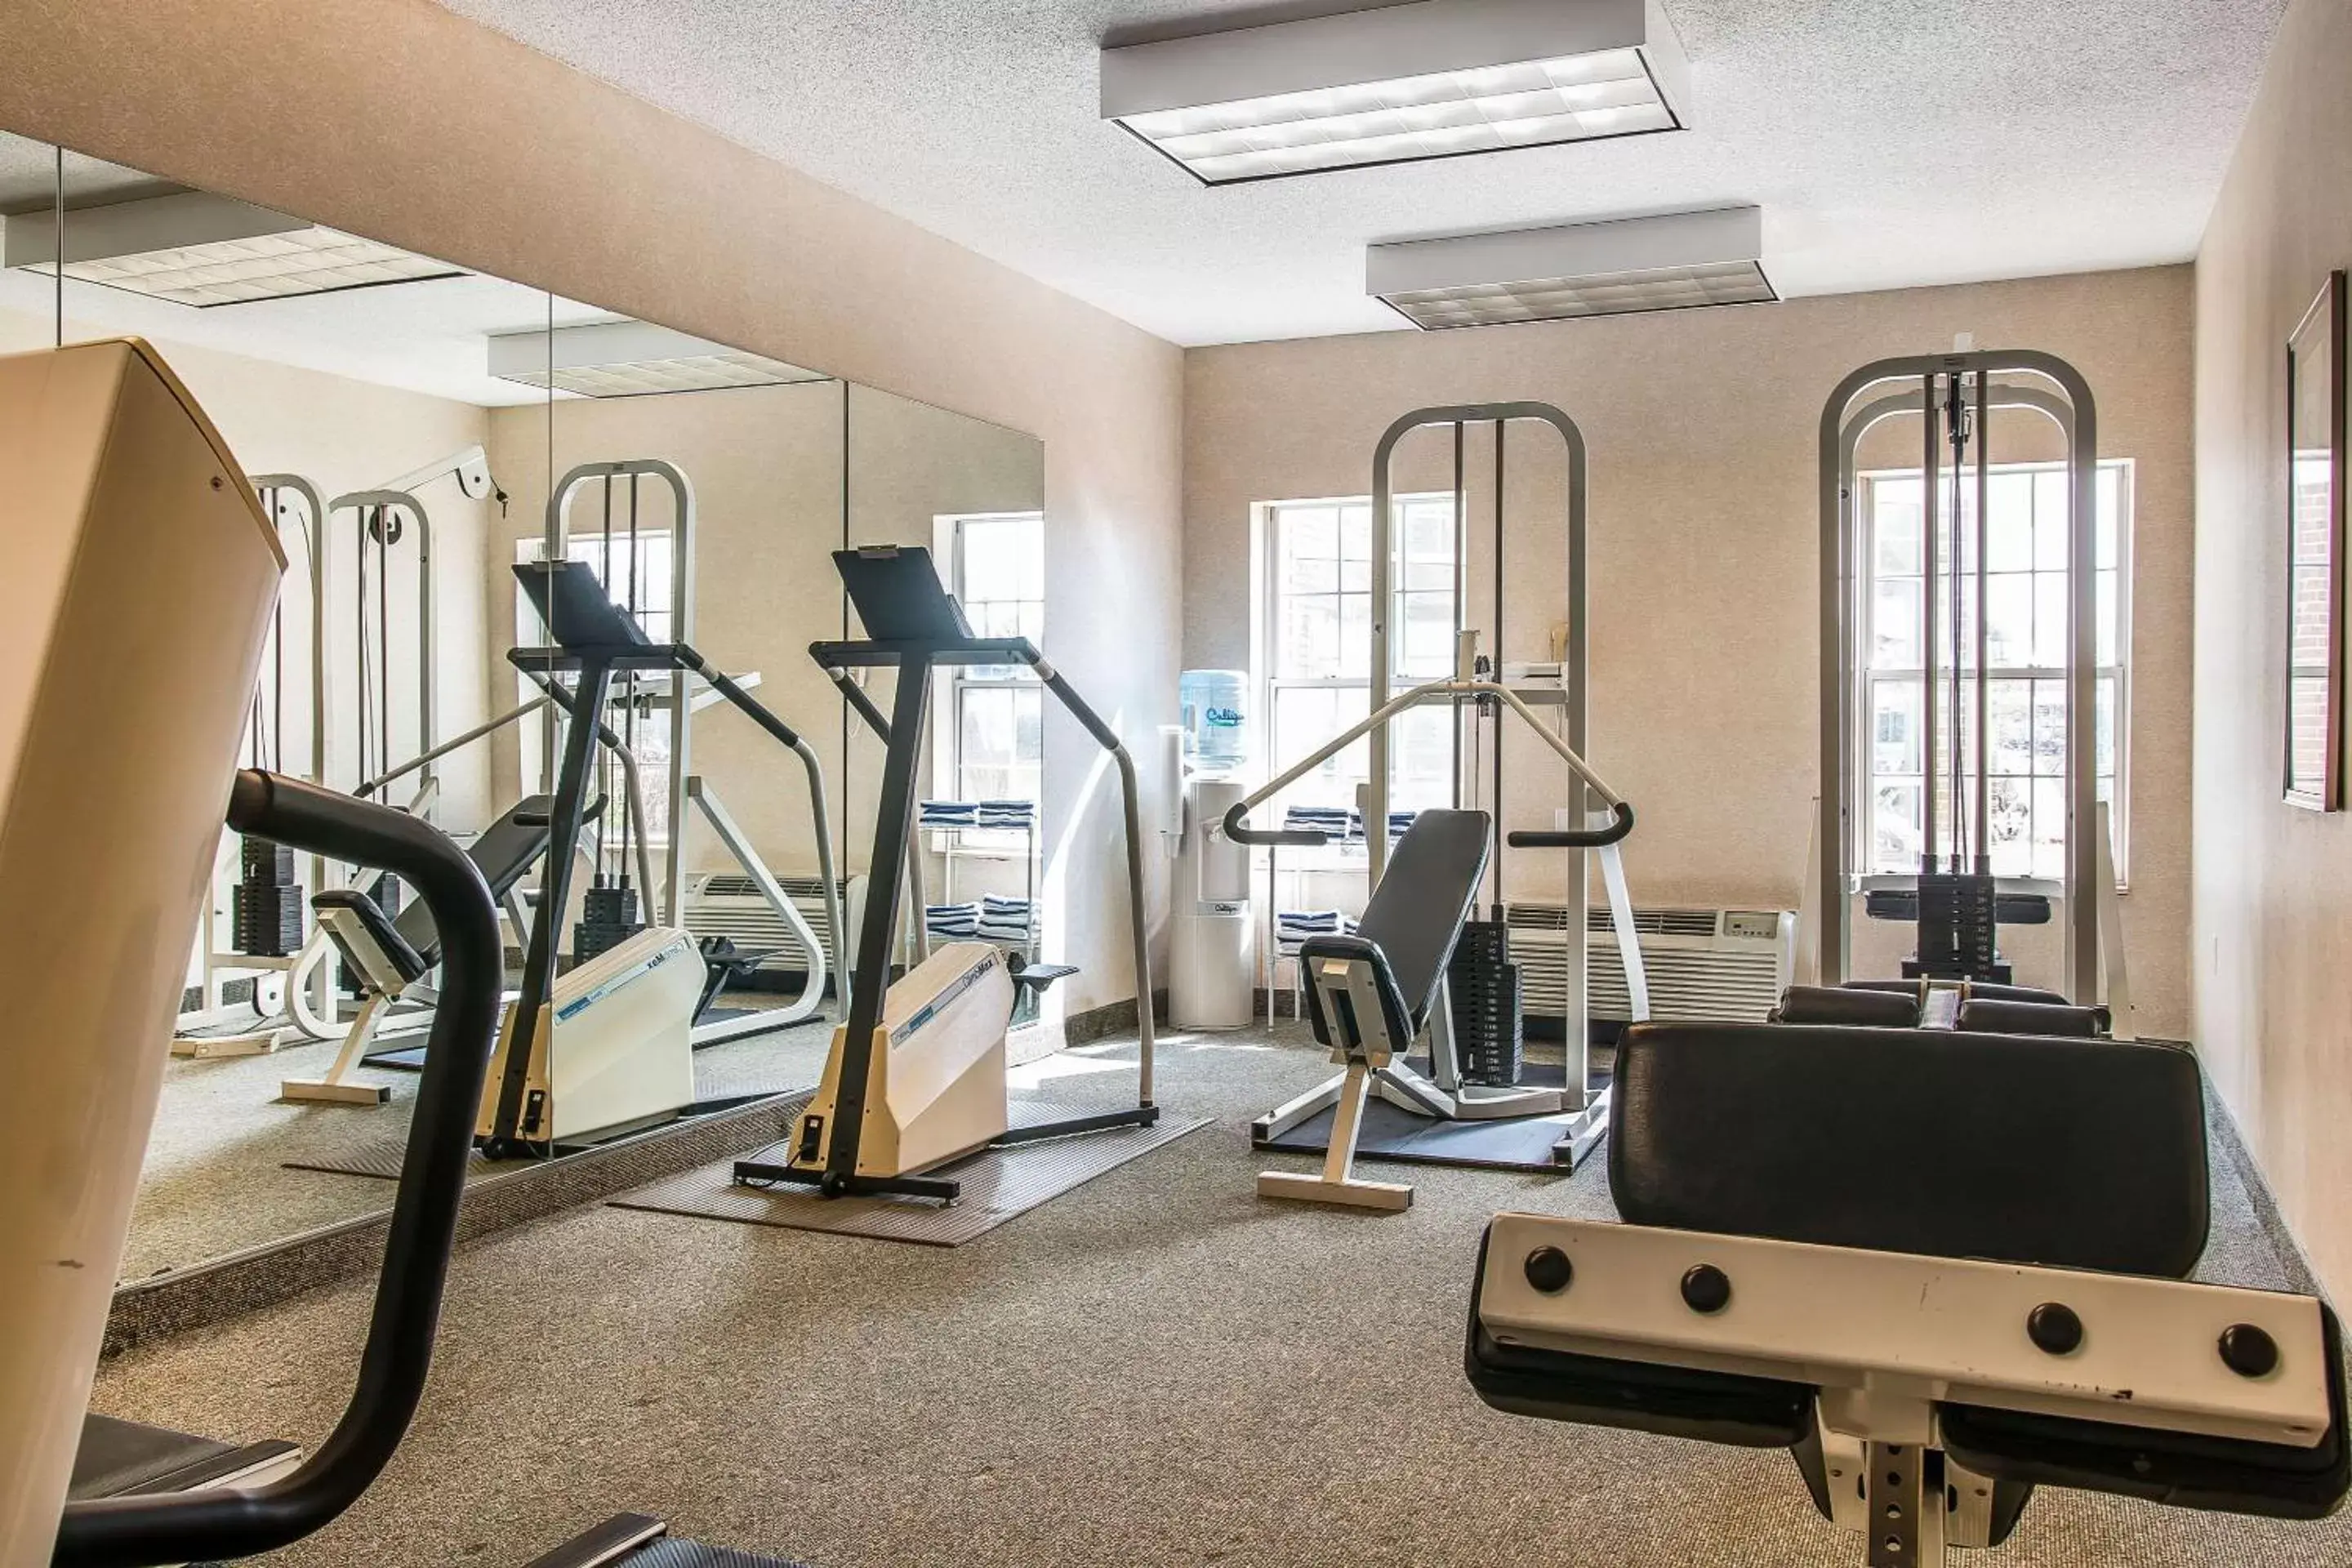 Fitness centre/facilities, Fitness Center/Facilities in Comfort Inn Chelsea